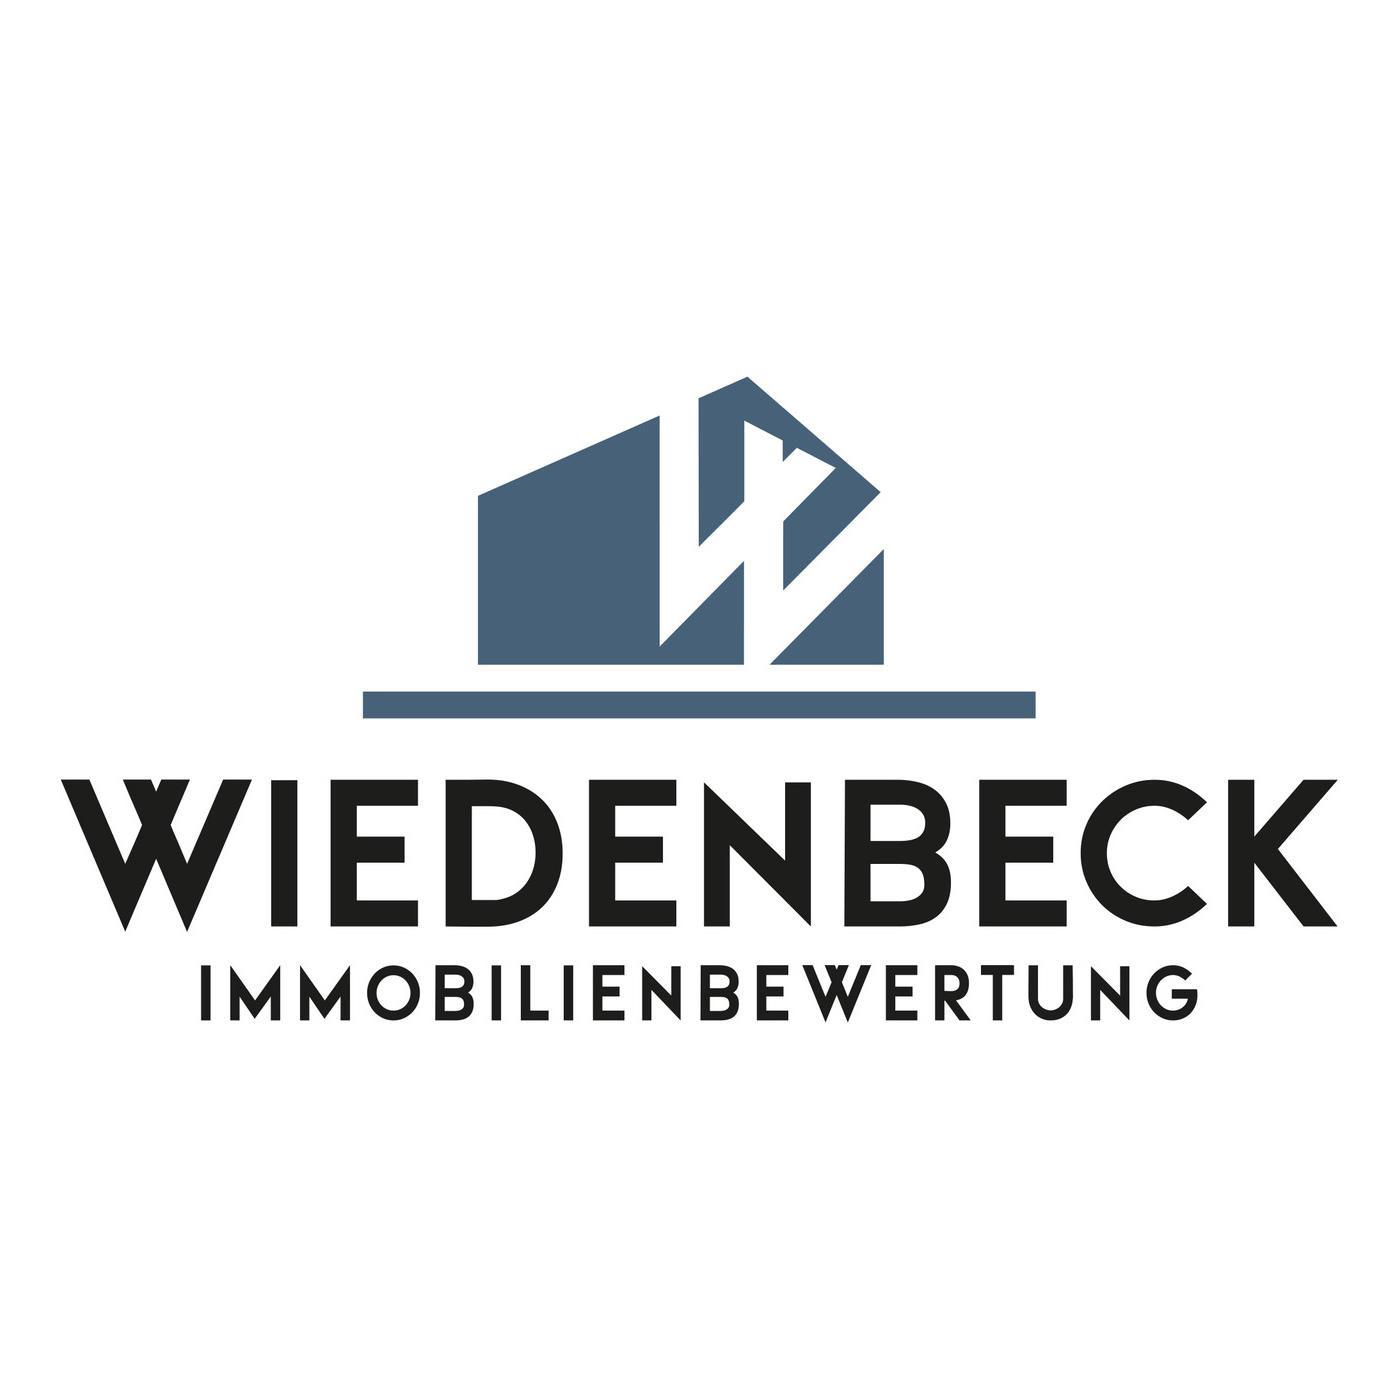 Immobilienbewertung Wolfram W. Wiedenbeck in Köln - Logo